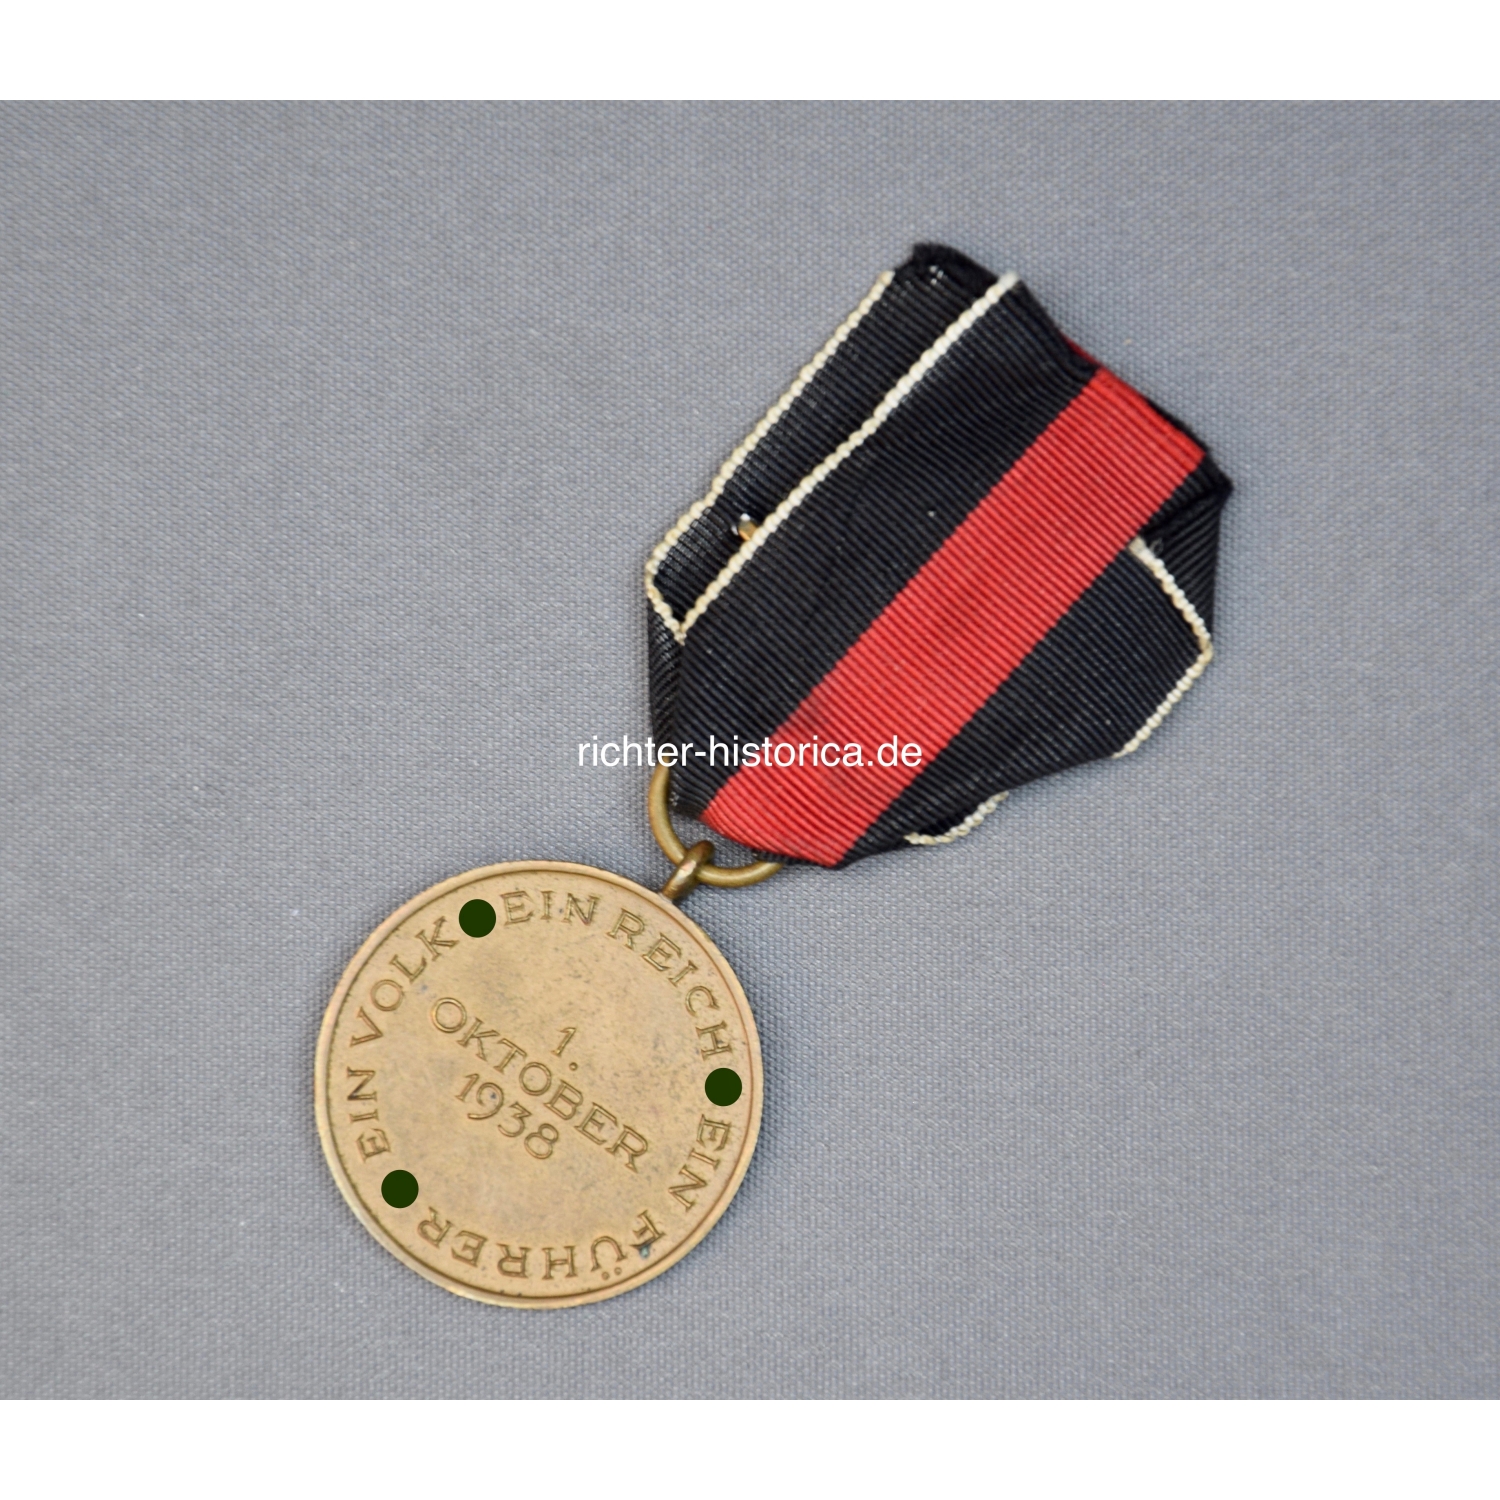 Medaille 1.Oktober 1938 mit Spange "Prager Burg" um Etui